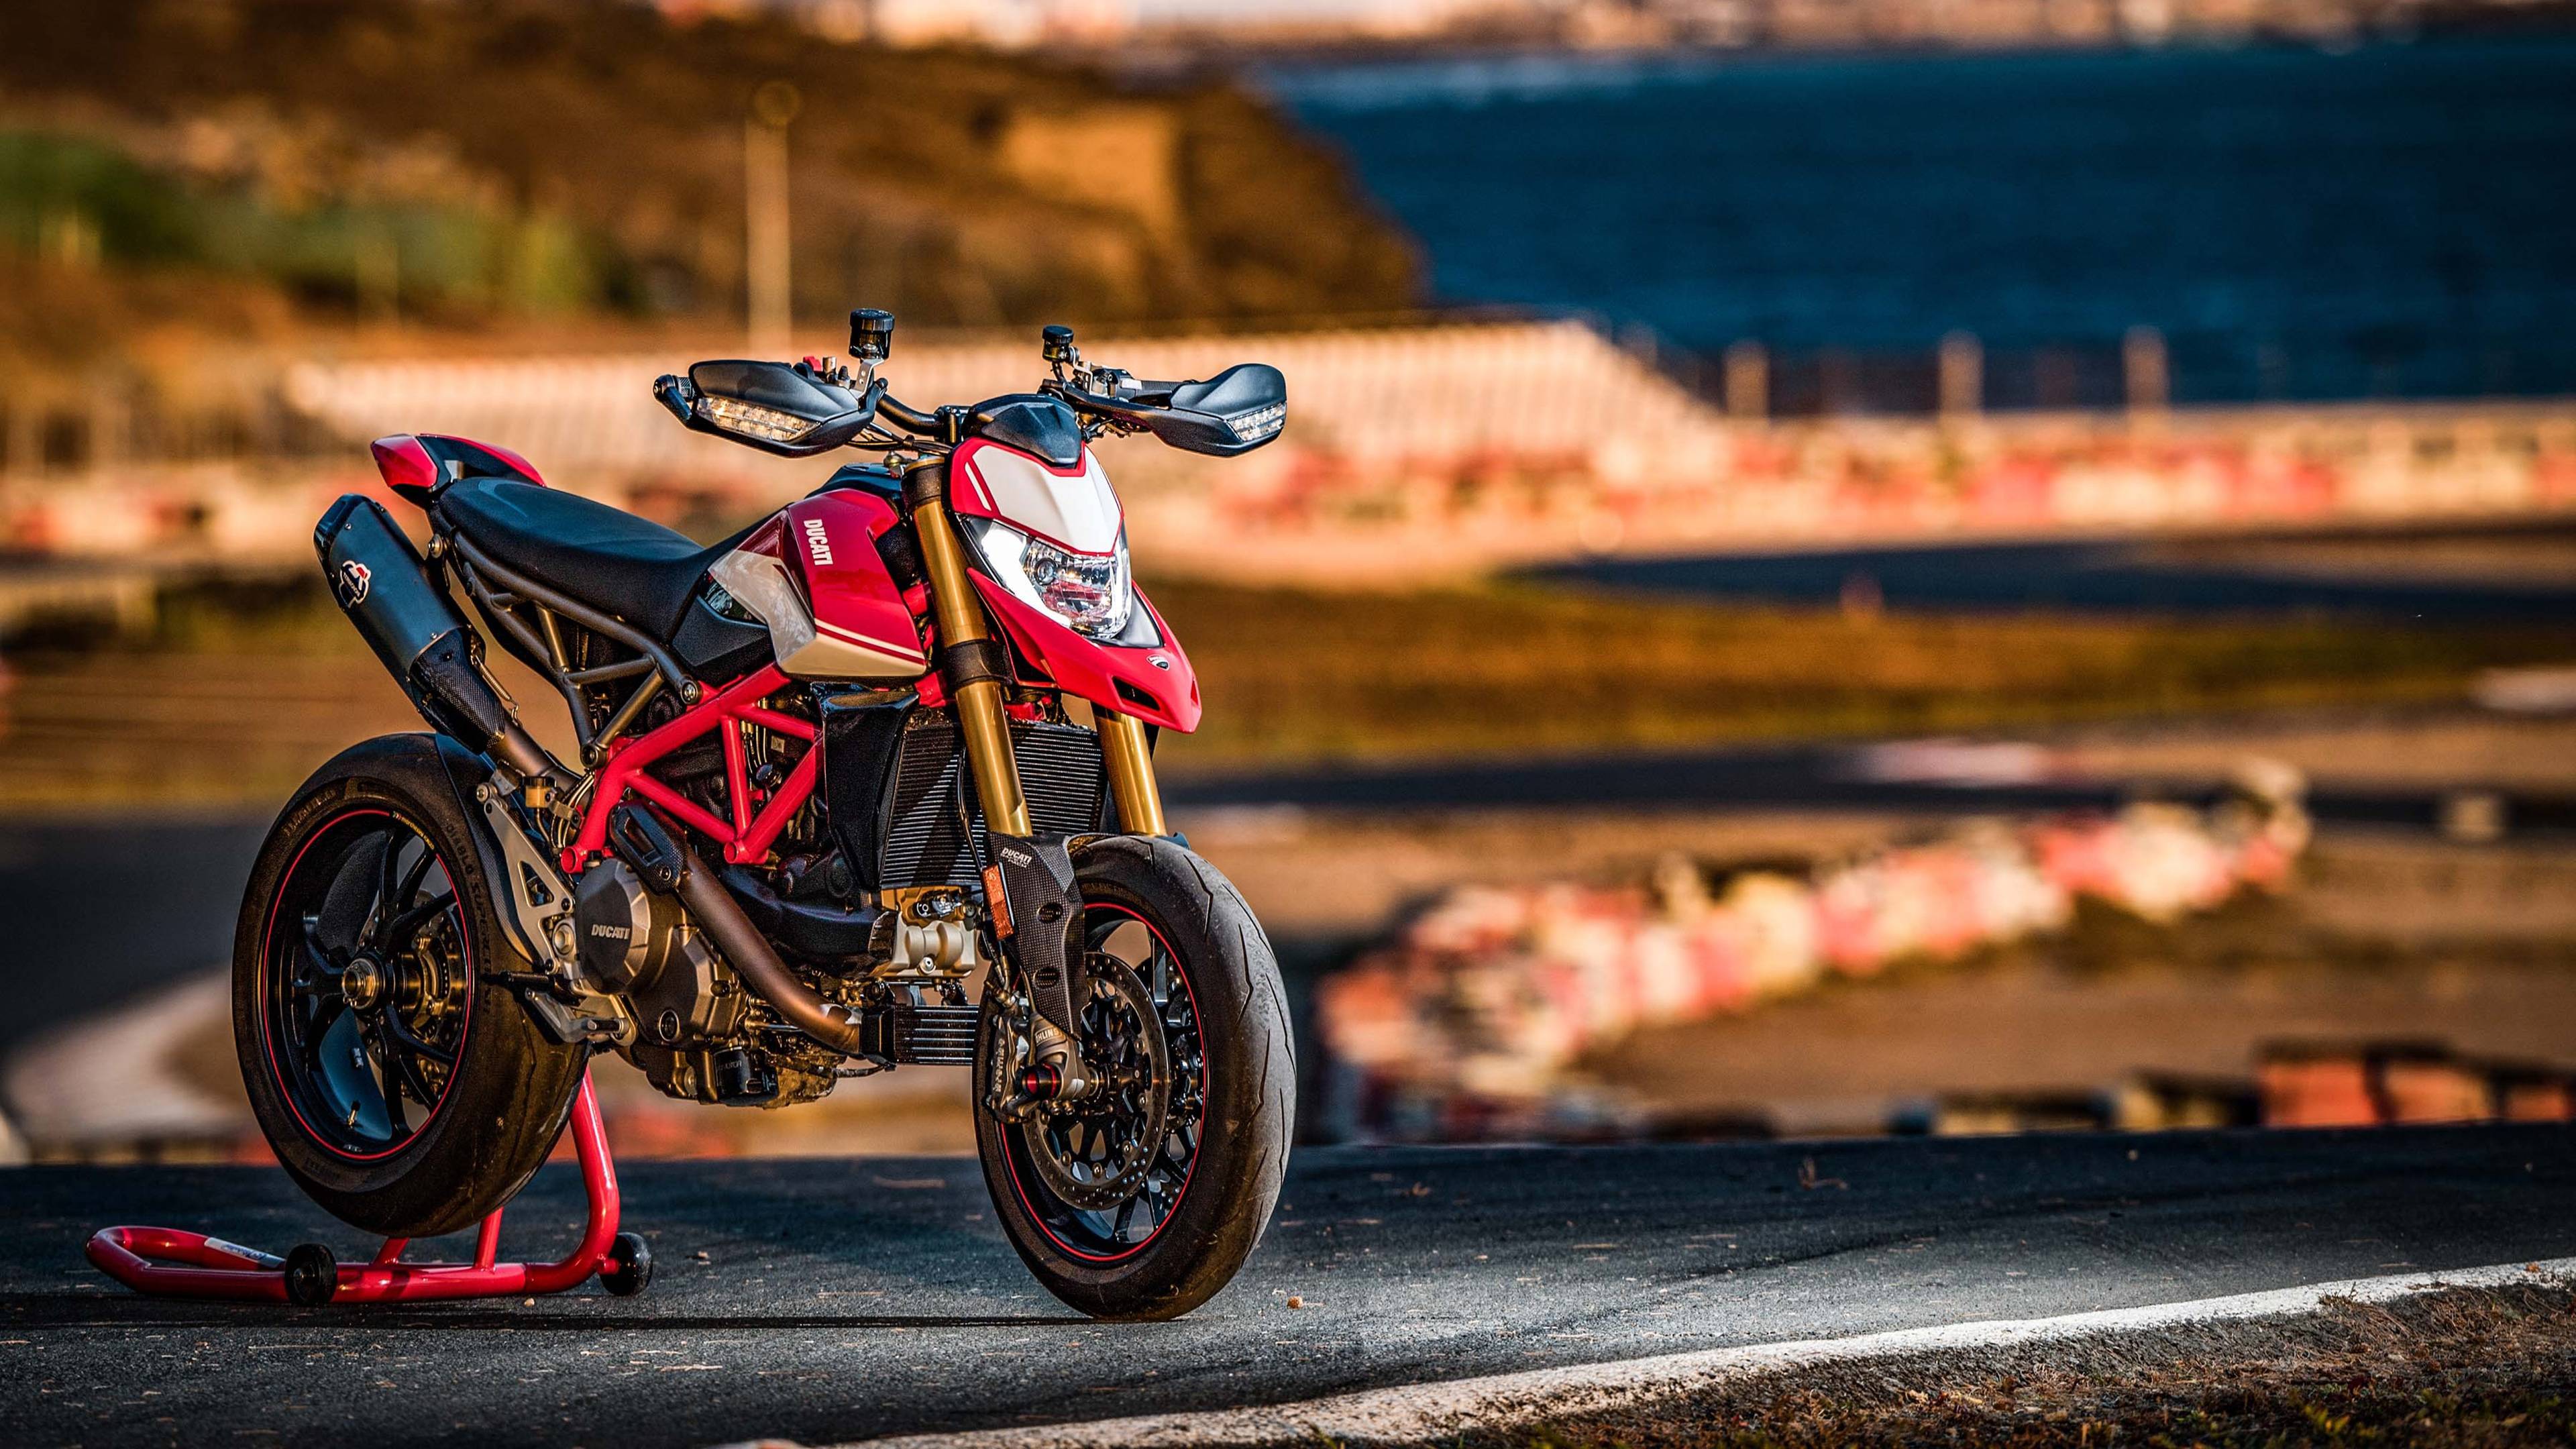 Ducati Hypermotard Wallpapers - Top Free Ducati Hypermotard Backgrounds ...